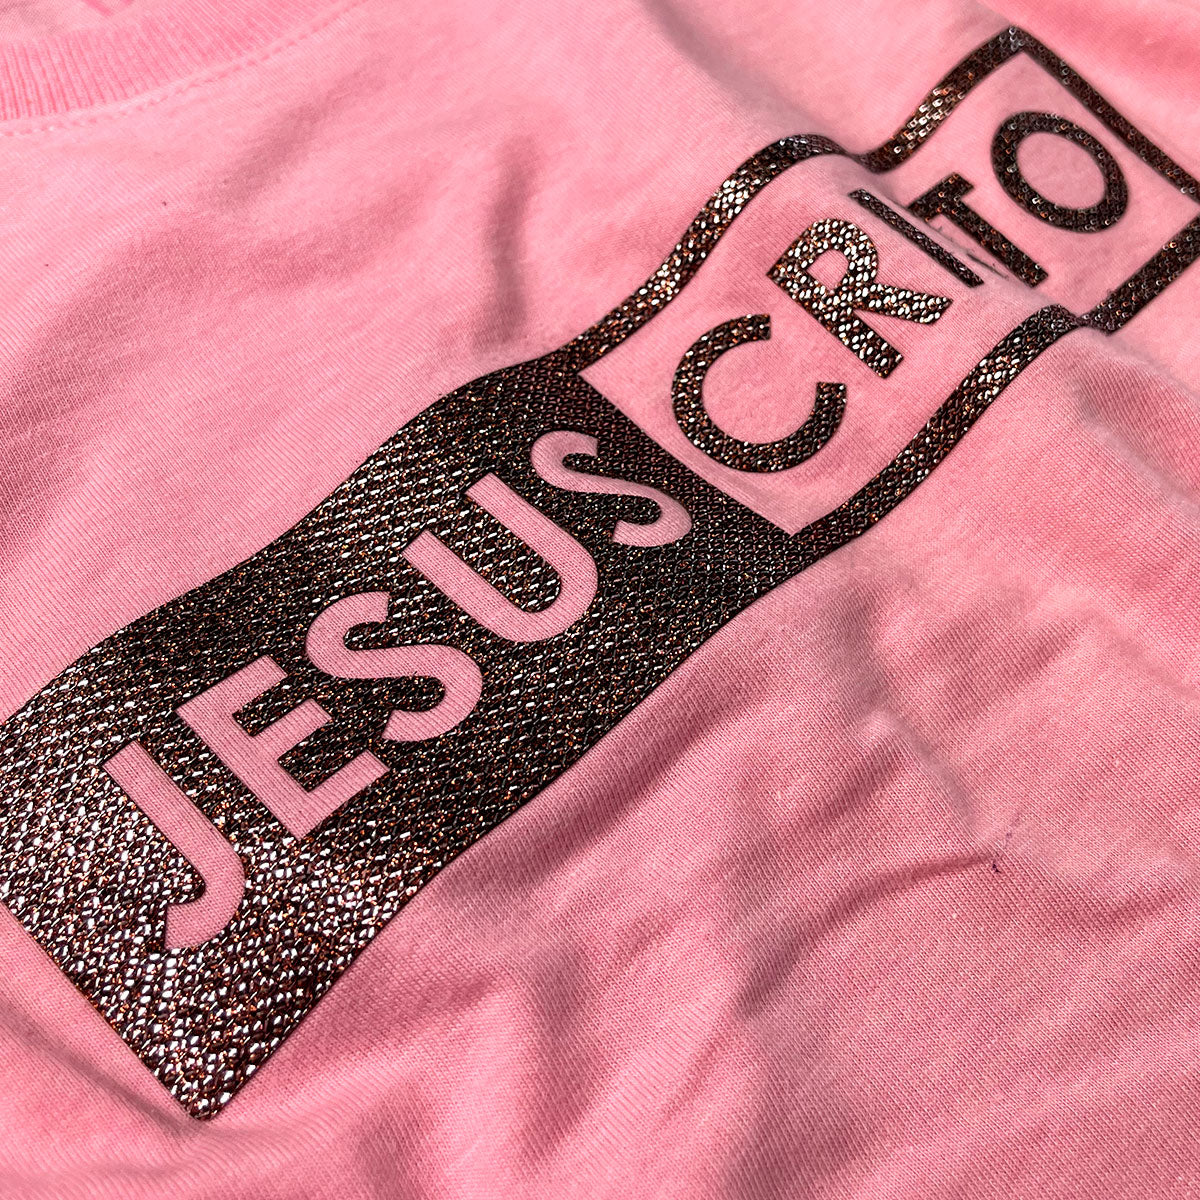 Camiseta Feminina Rosa Jesus Cristo Glitter